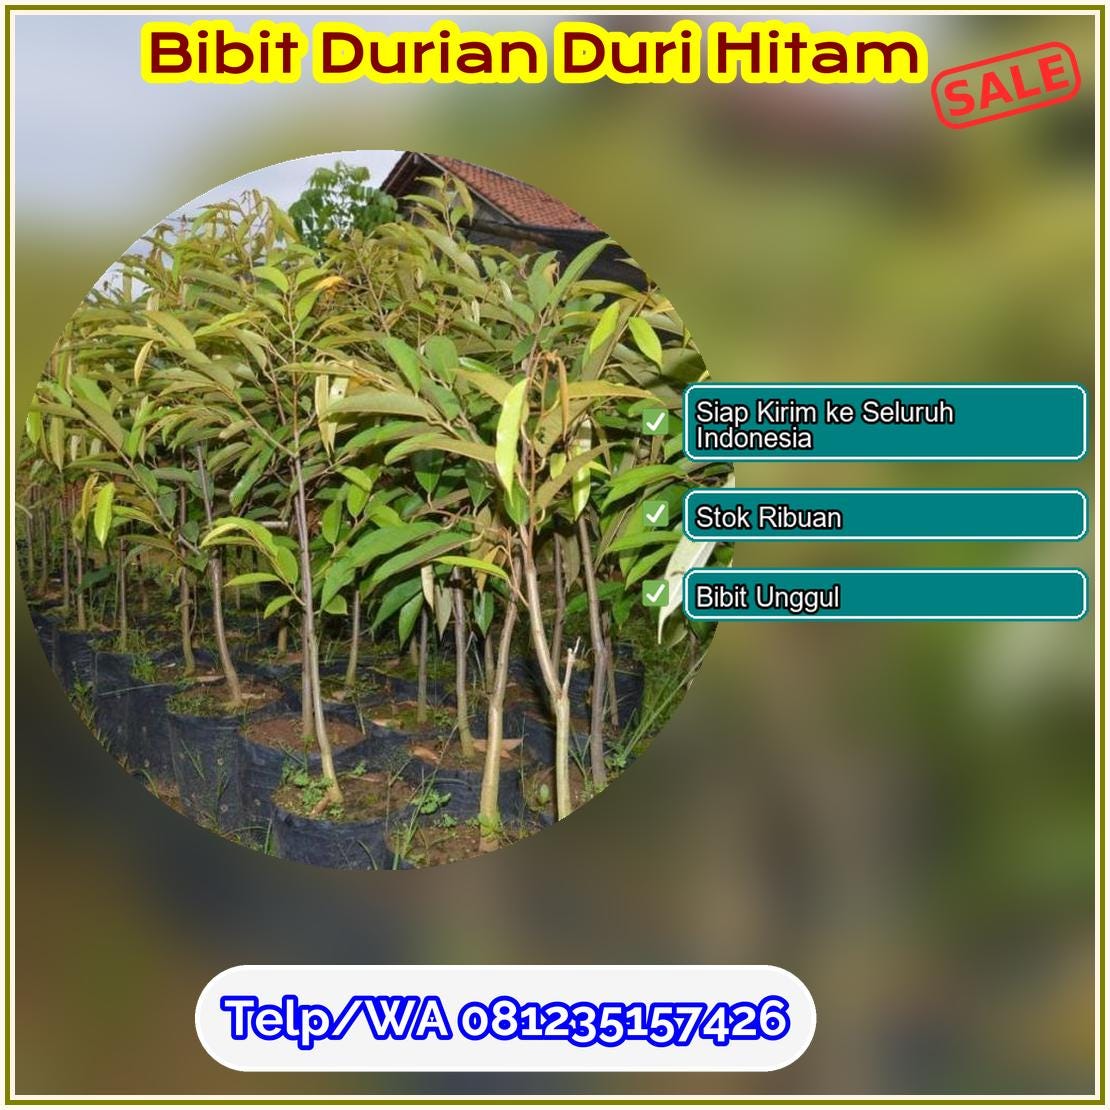 Harga Bibit Durian Duri Hitam Lumajang